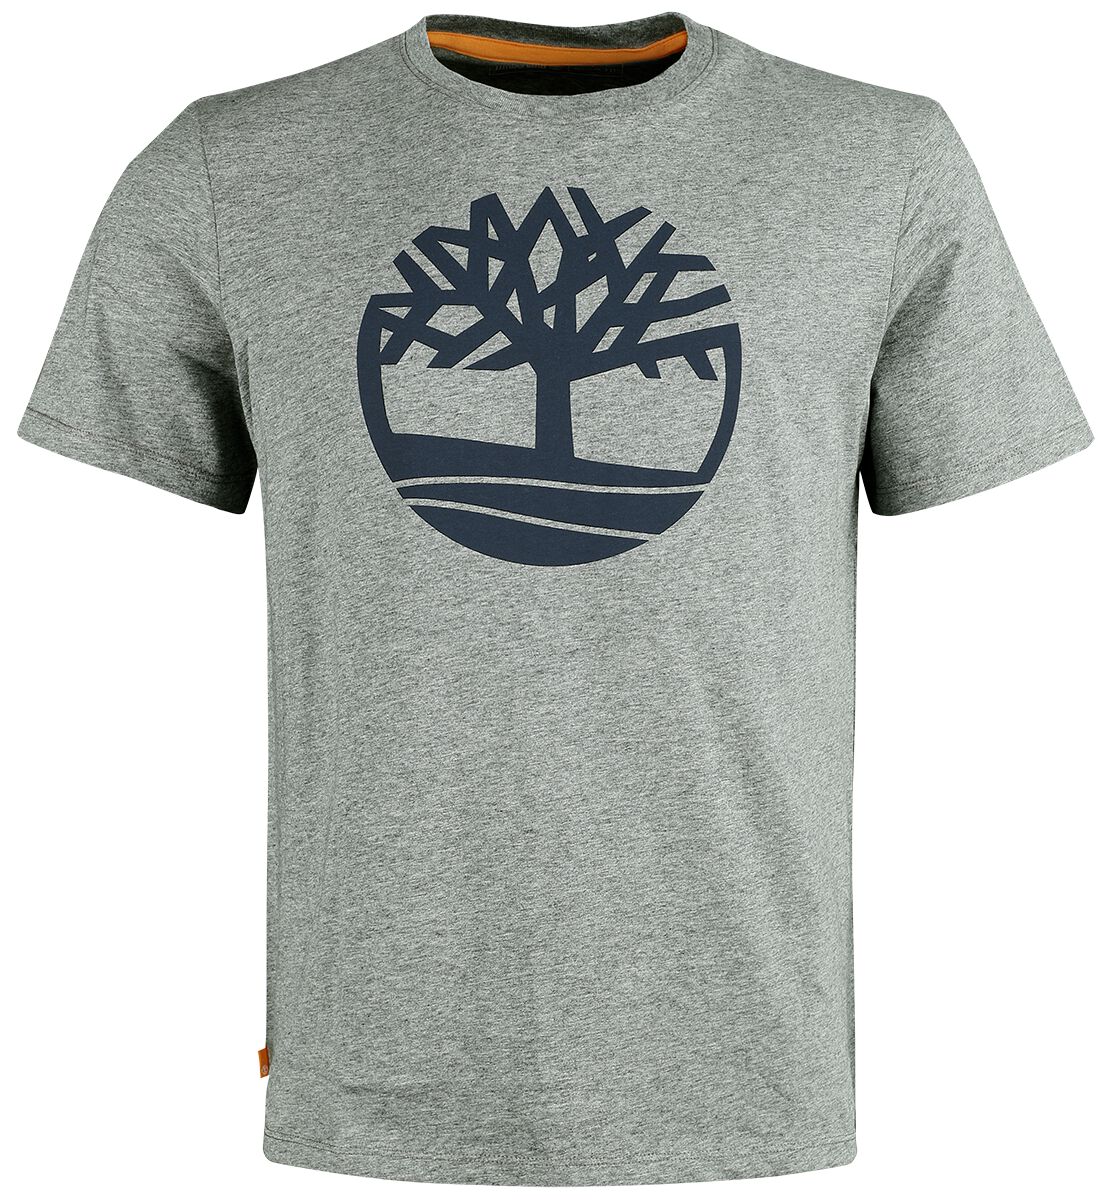 Timberland Kennebec River Tree Logo Short Sleeve Tee T-Shirt grau meliert in M